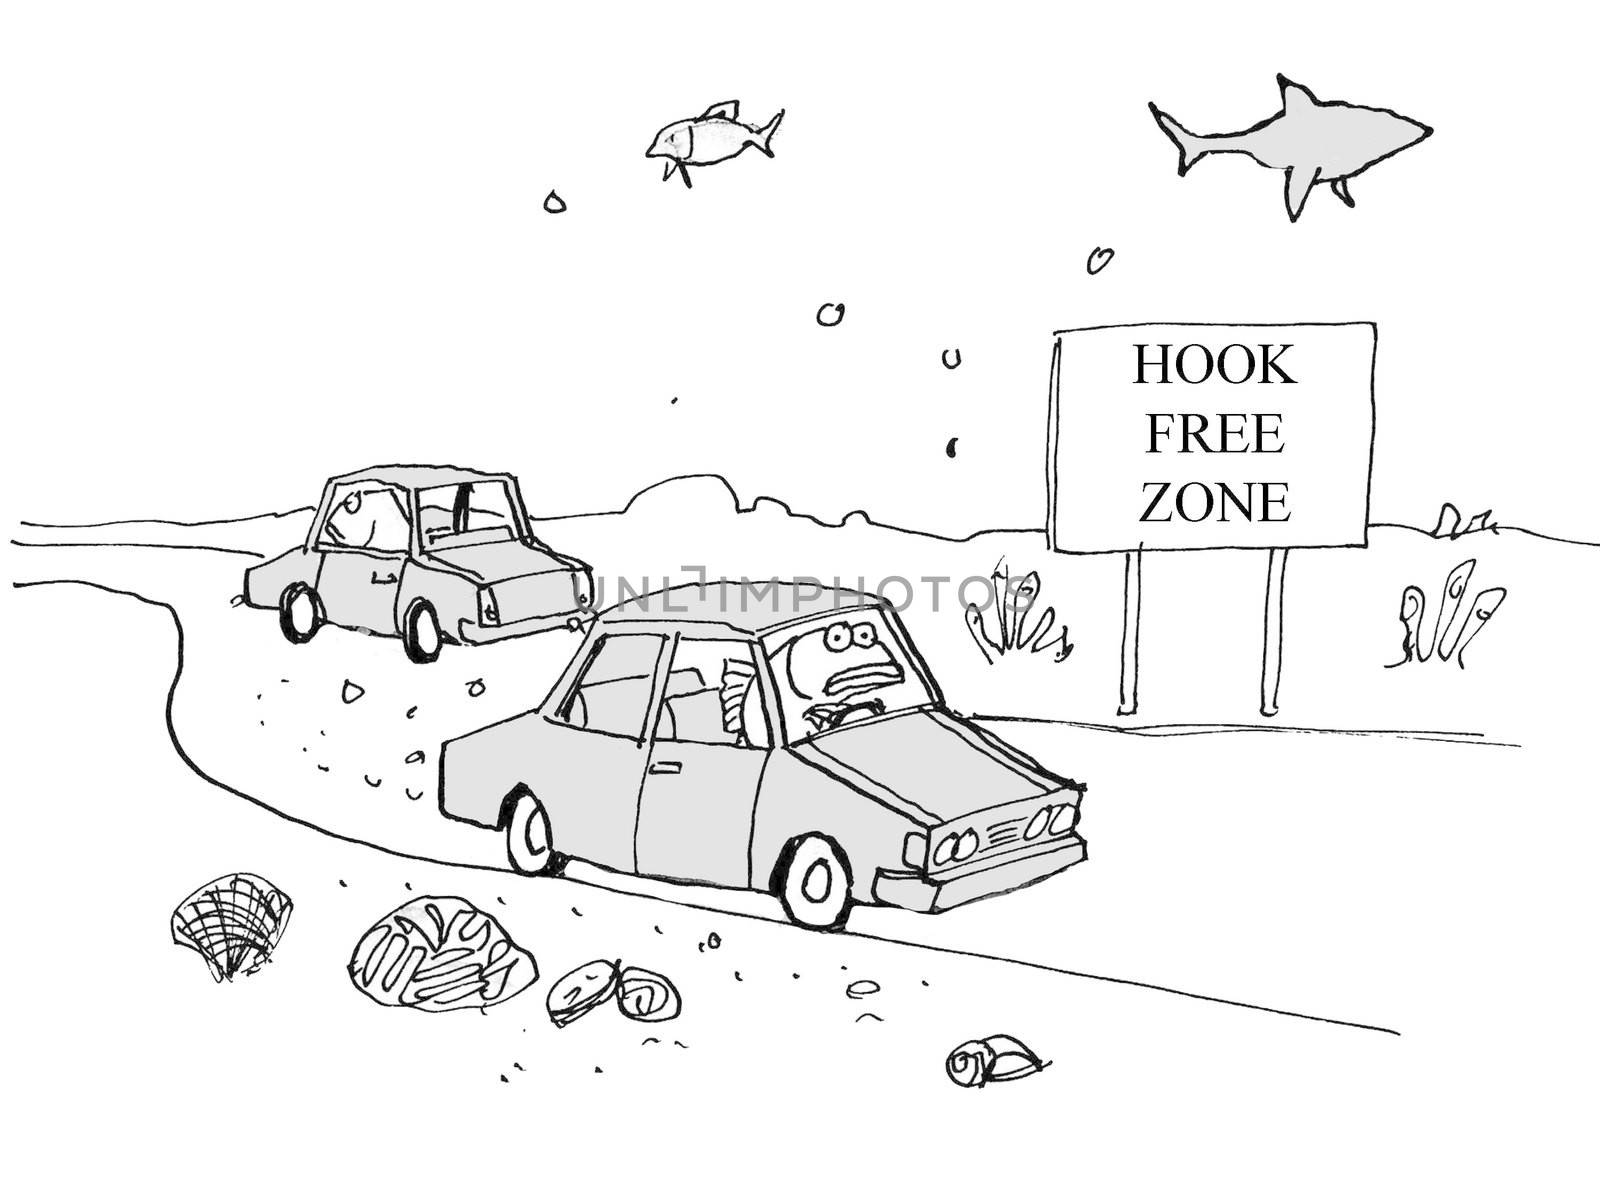 Hook Free Zone. by andrewgenn